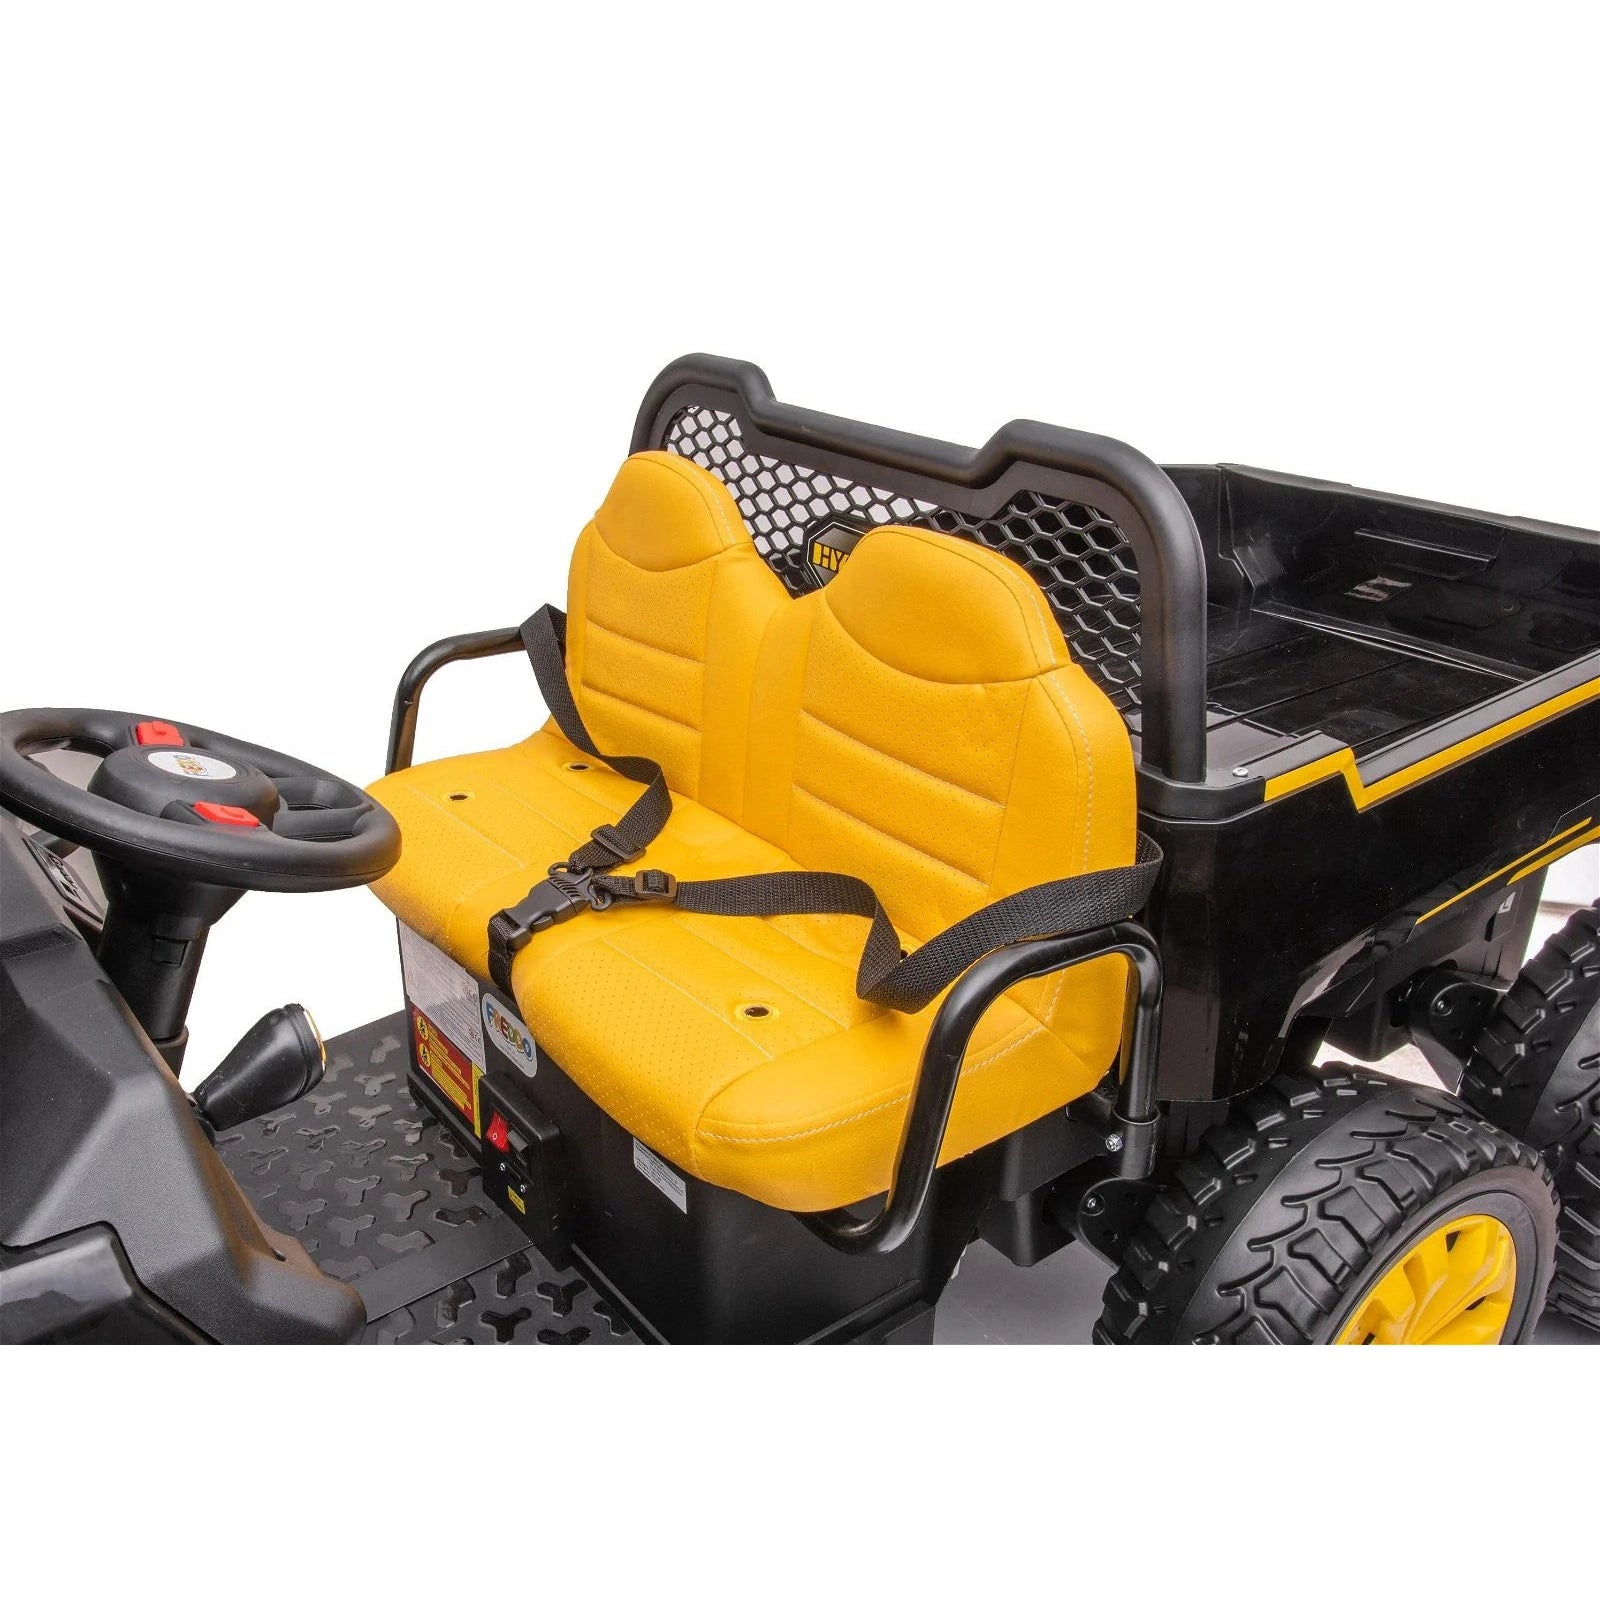 Freddo 24V 6 Wheeler Freddo Tractor Trailer 2 Seater Ride-on With Dump Cart and Parental Remote SpadezStore